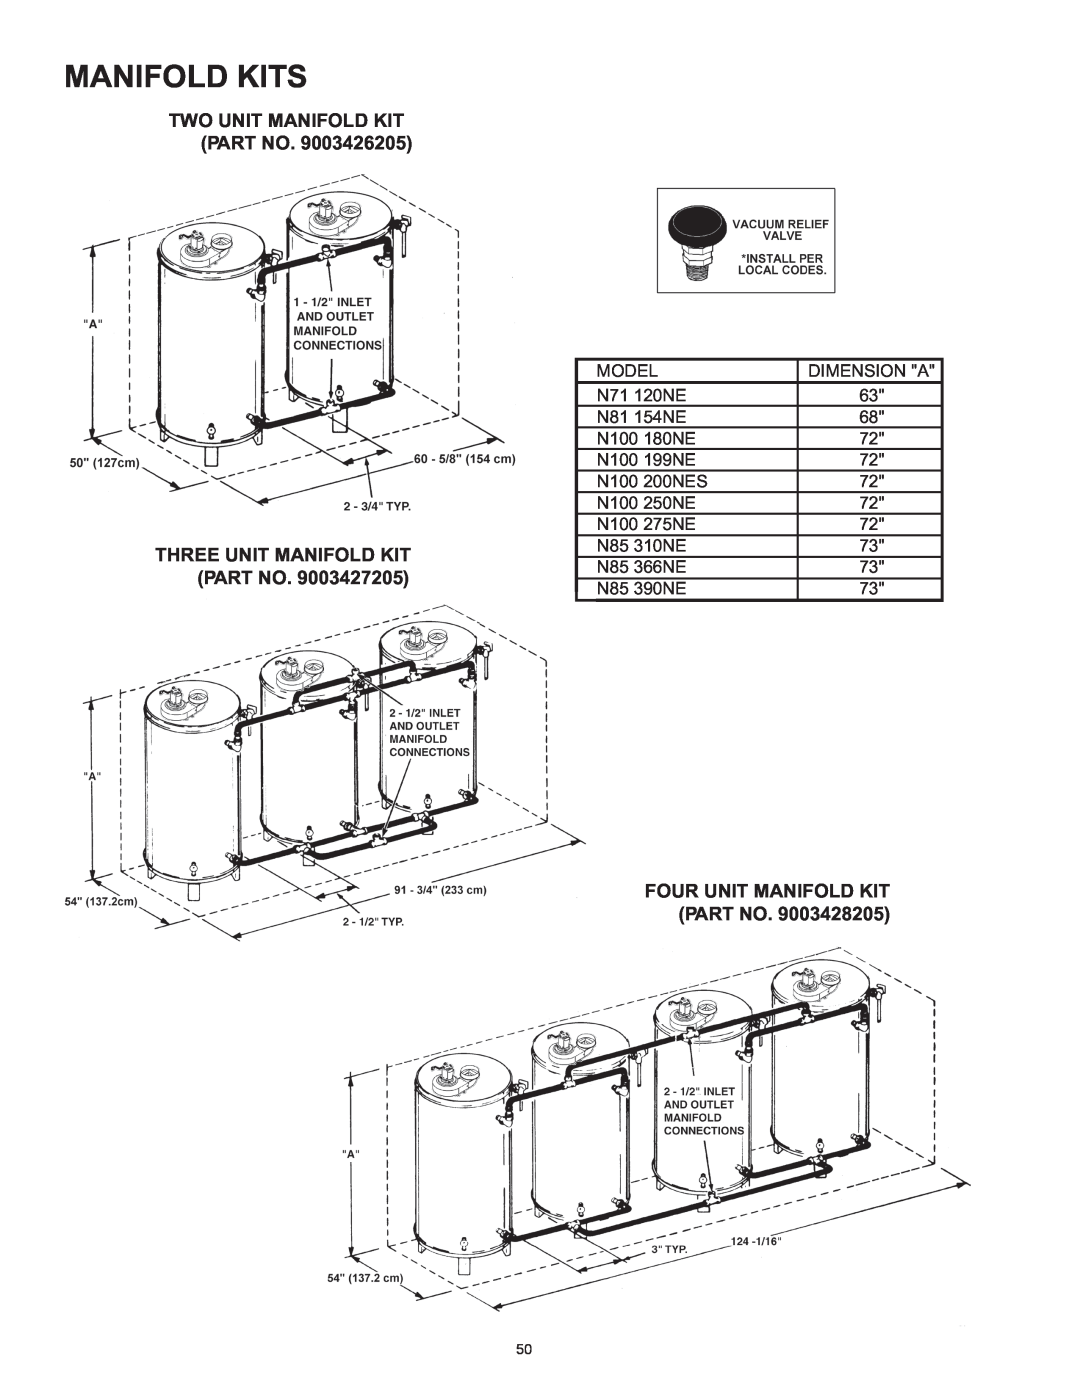 Reliance Water Heaters N85390NE, N71120NE Manifold Kits, Two Unit Manifold Kit Part No, Three Unit Manifold Kit Part No 